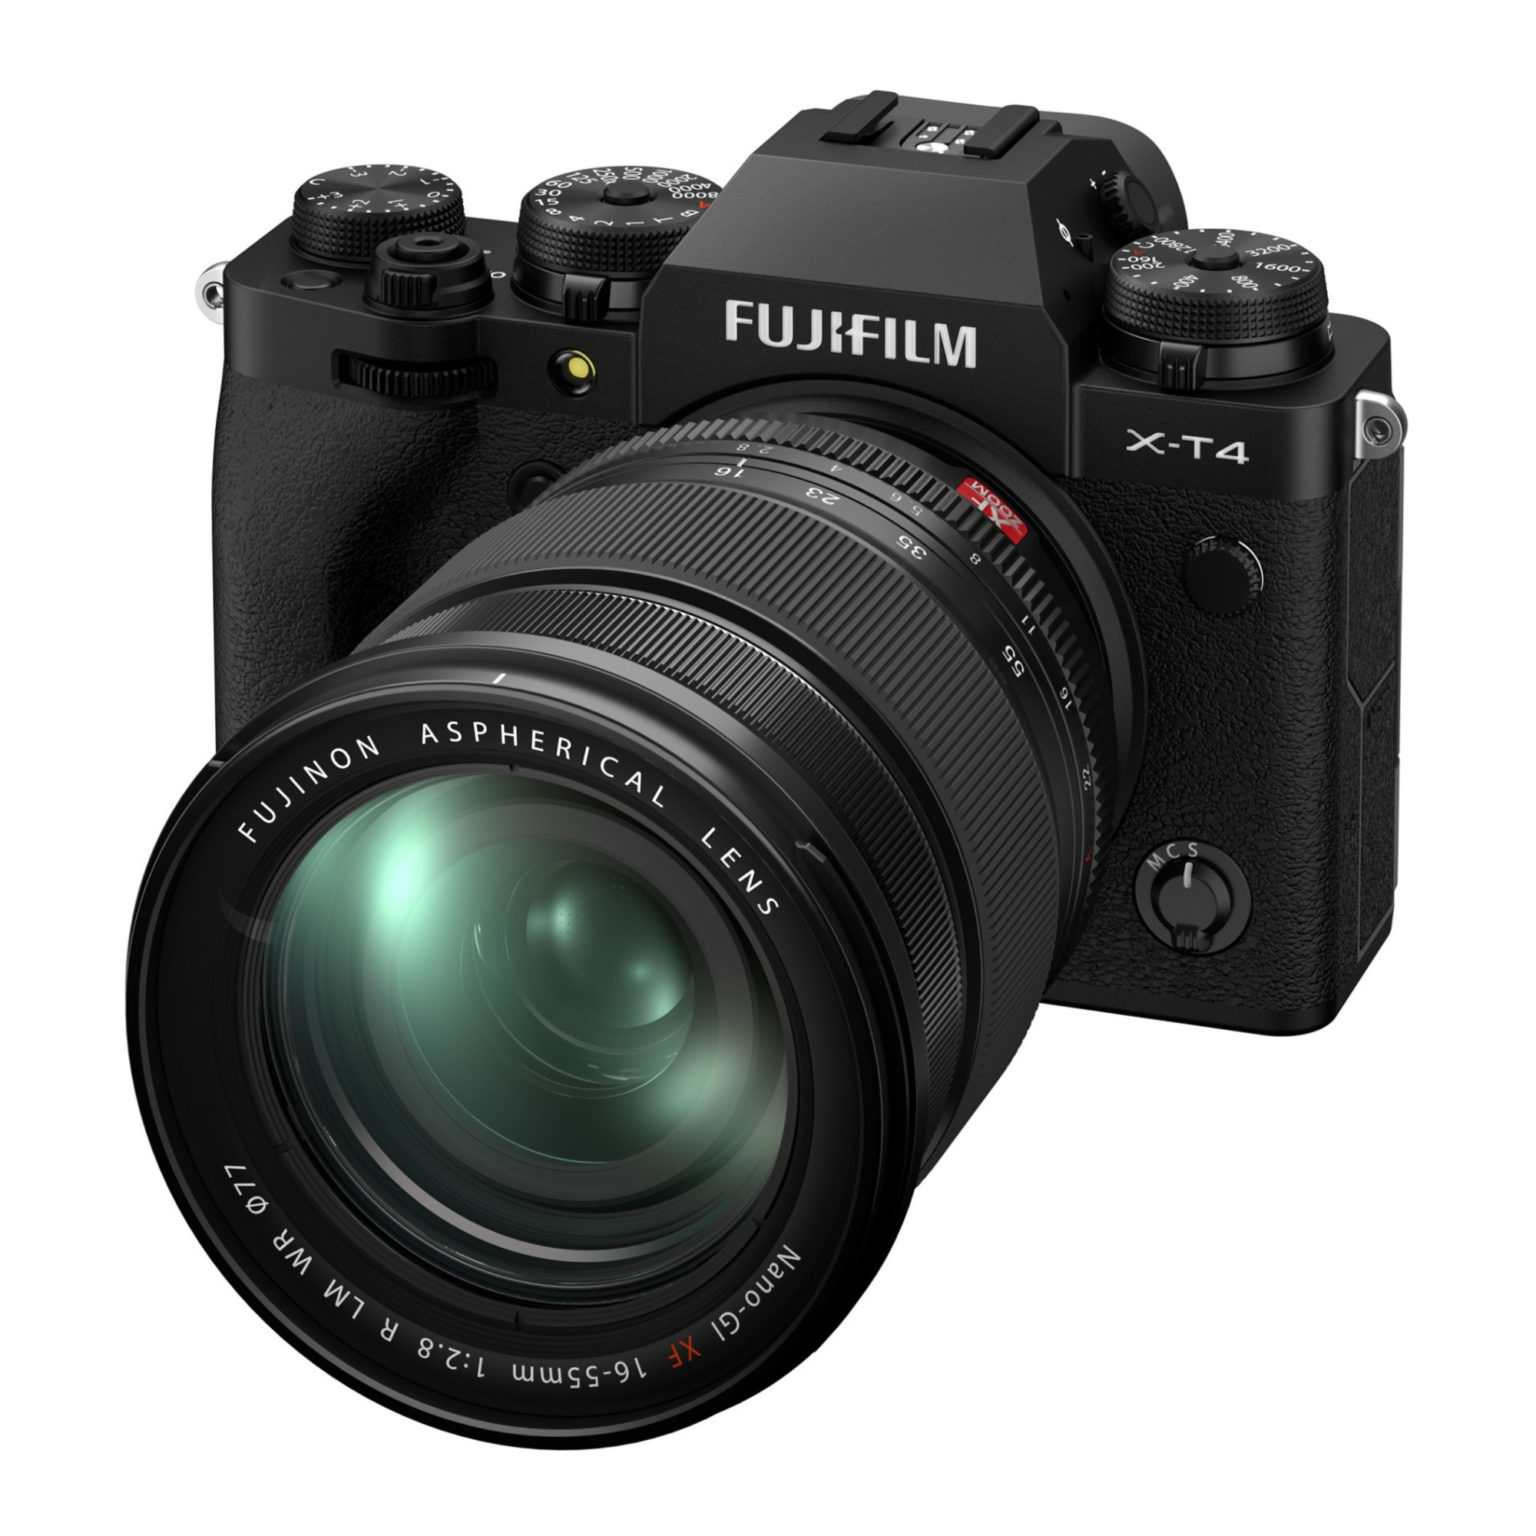 Fujifilm X-T5 to be Announced with 40MP Non-Stacked Sensor | Fujifilm